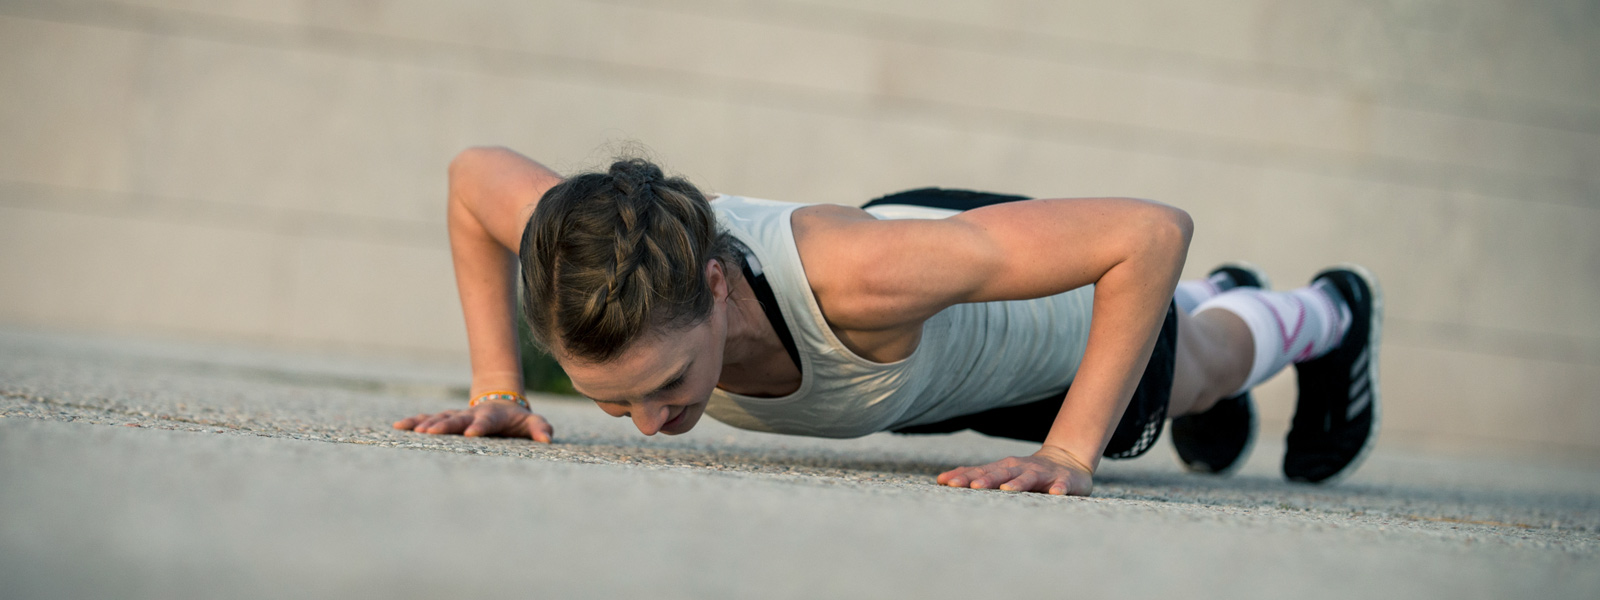 Woman puts push-ups on a concrete floor view of diagonal